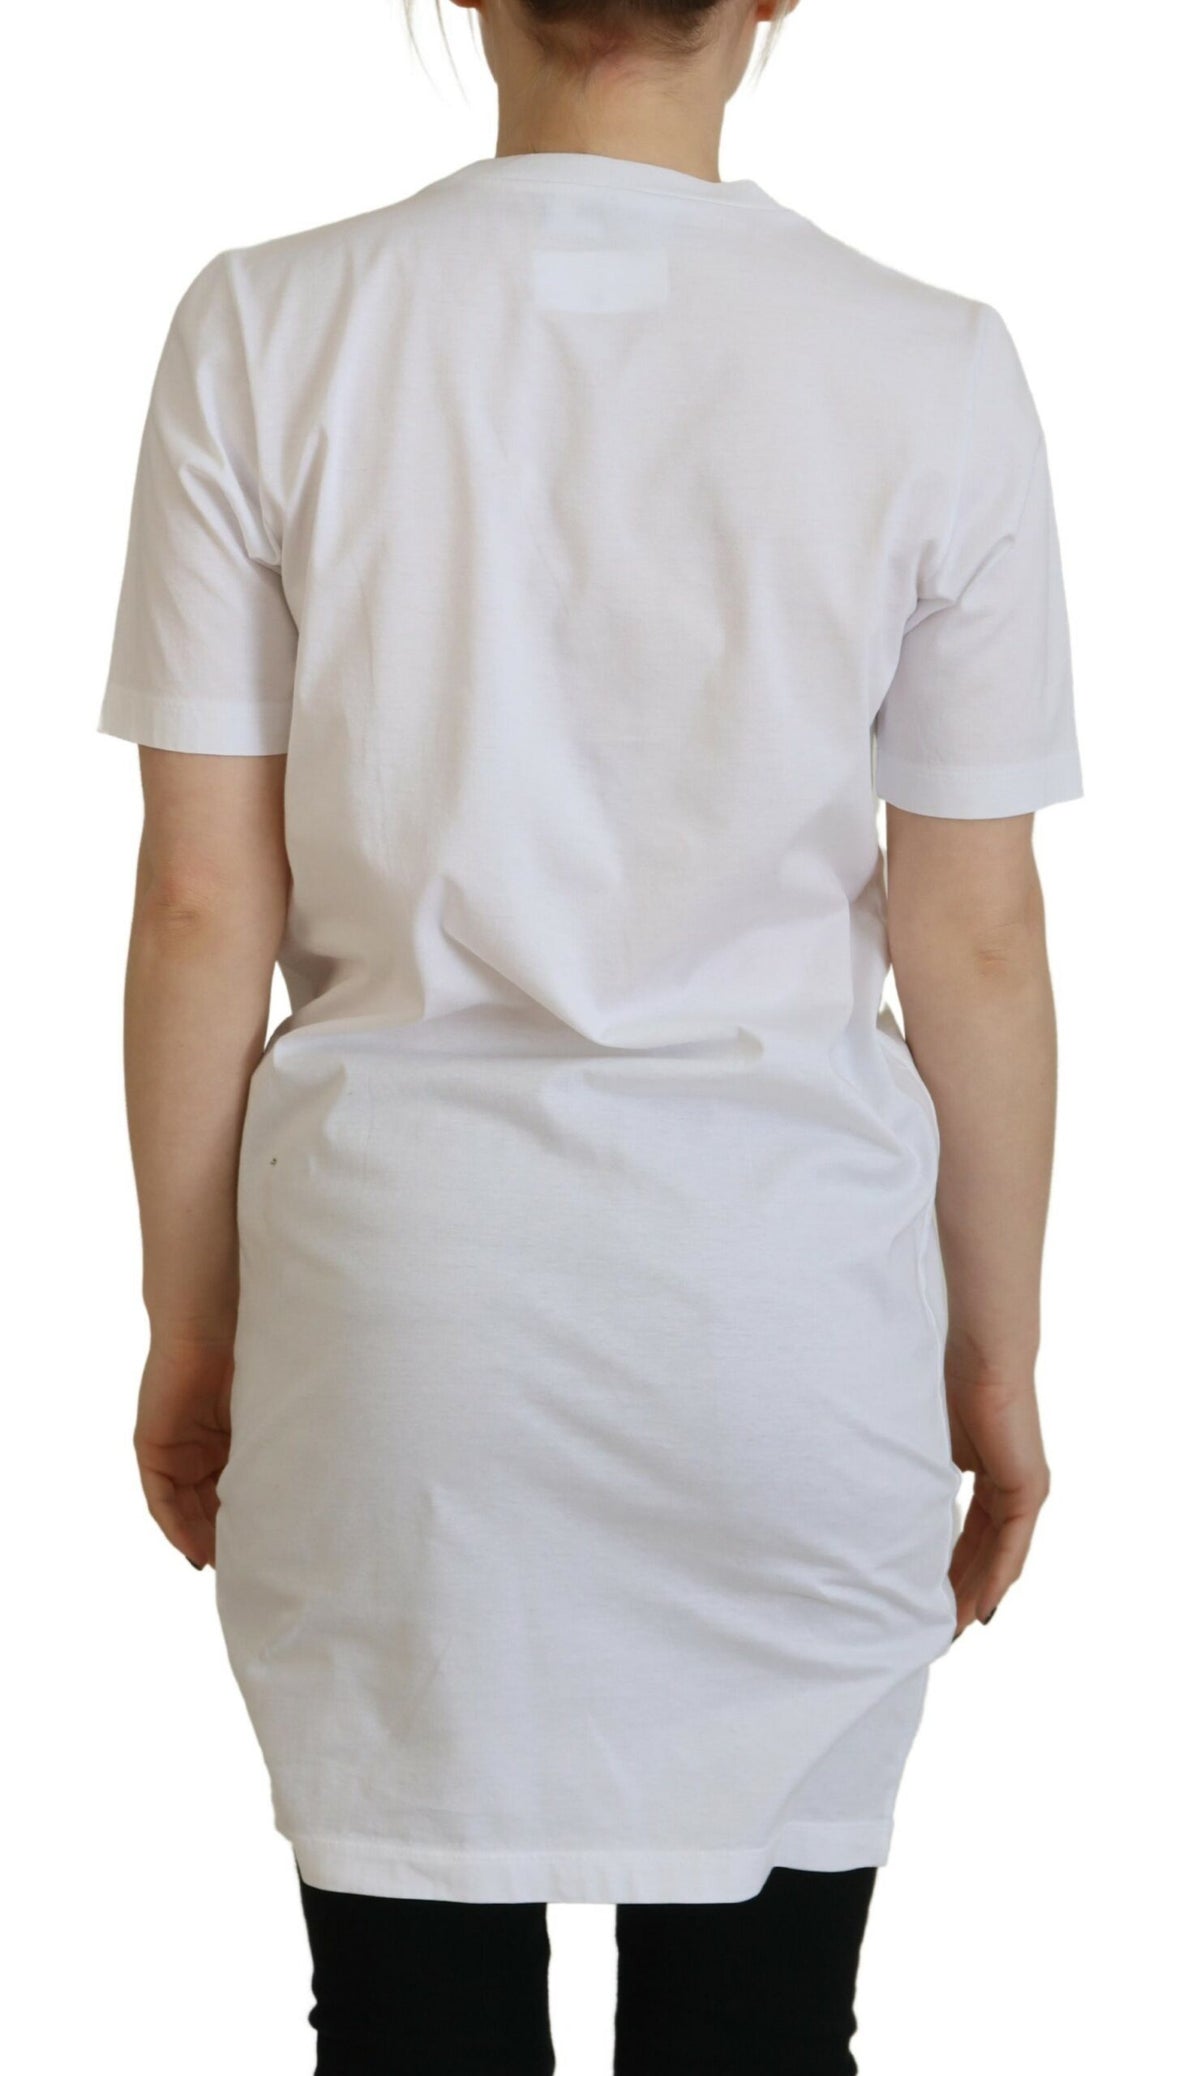 Dsquared² White Cotton Icon Logo Print Crewneck T-shirt